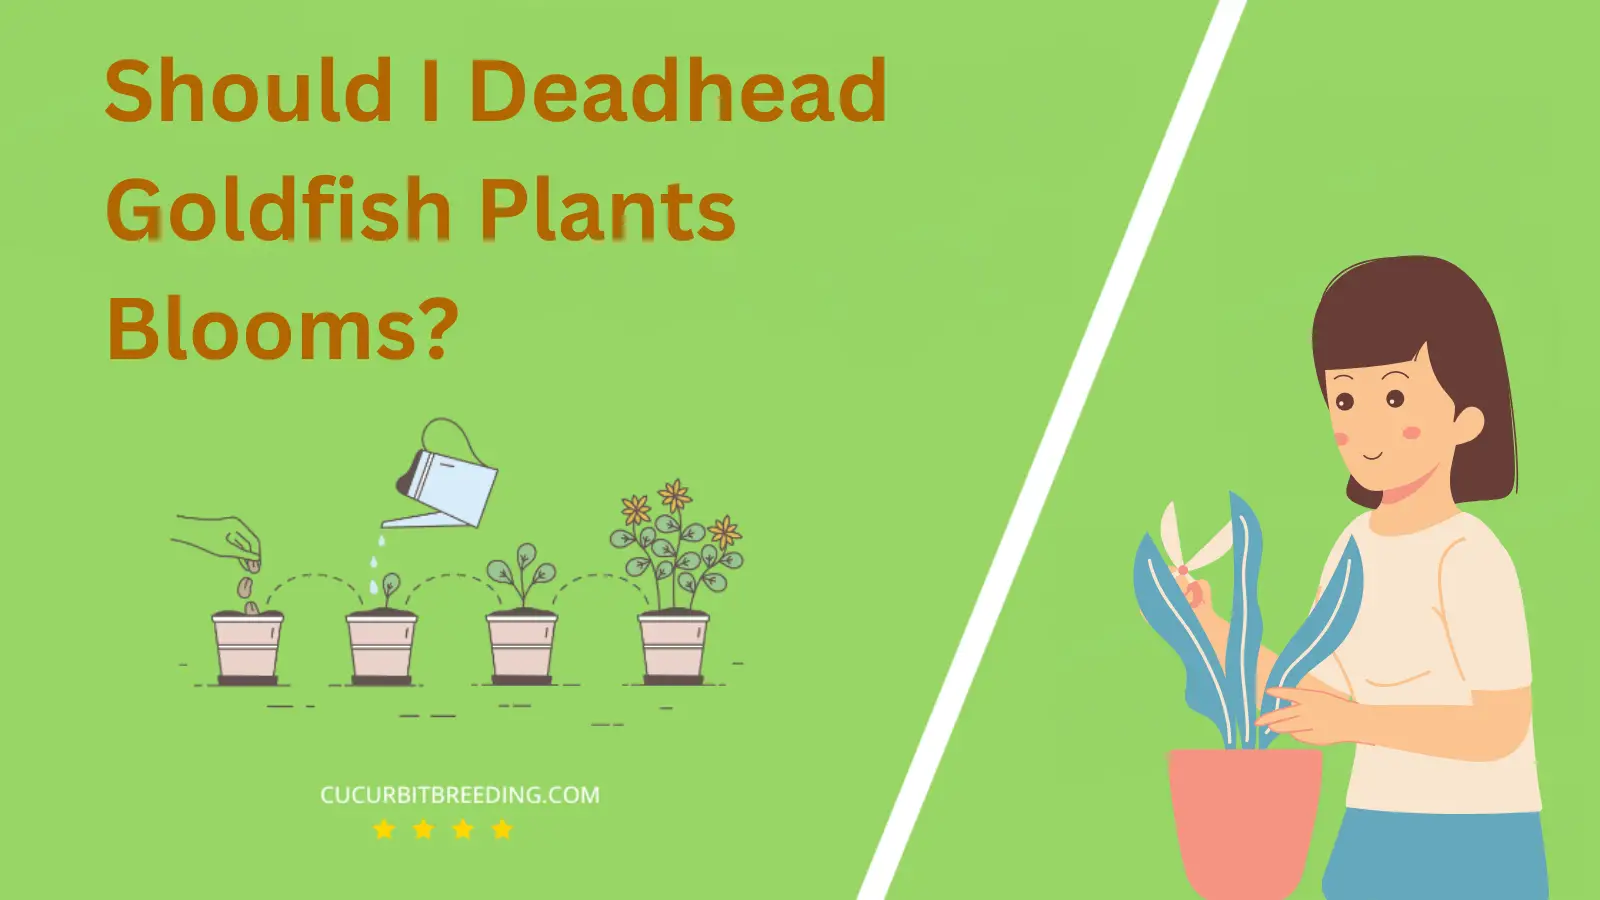 Should I Deadhead Goldfish Plants Blooms?